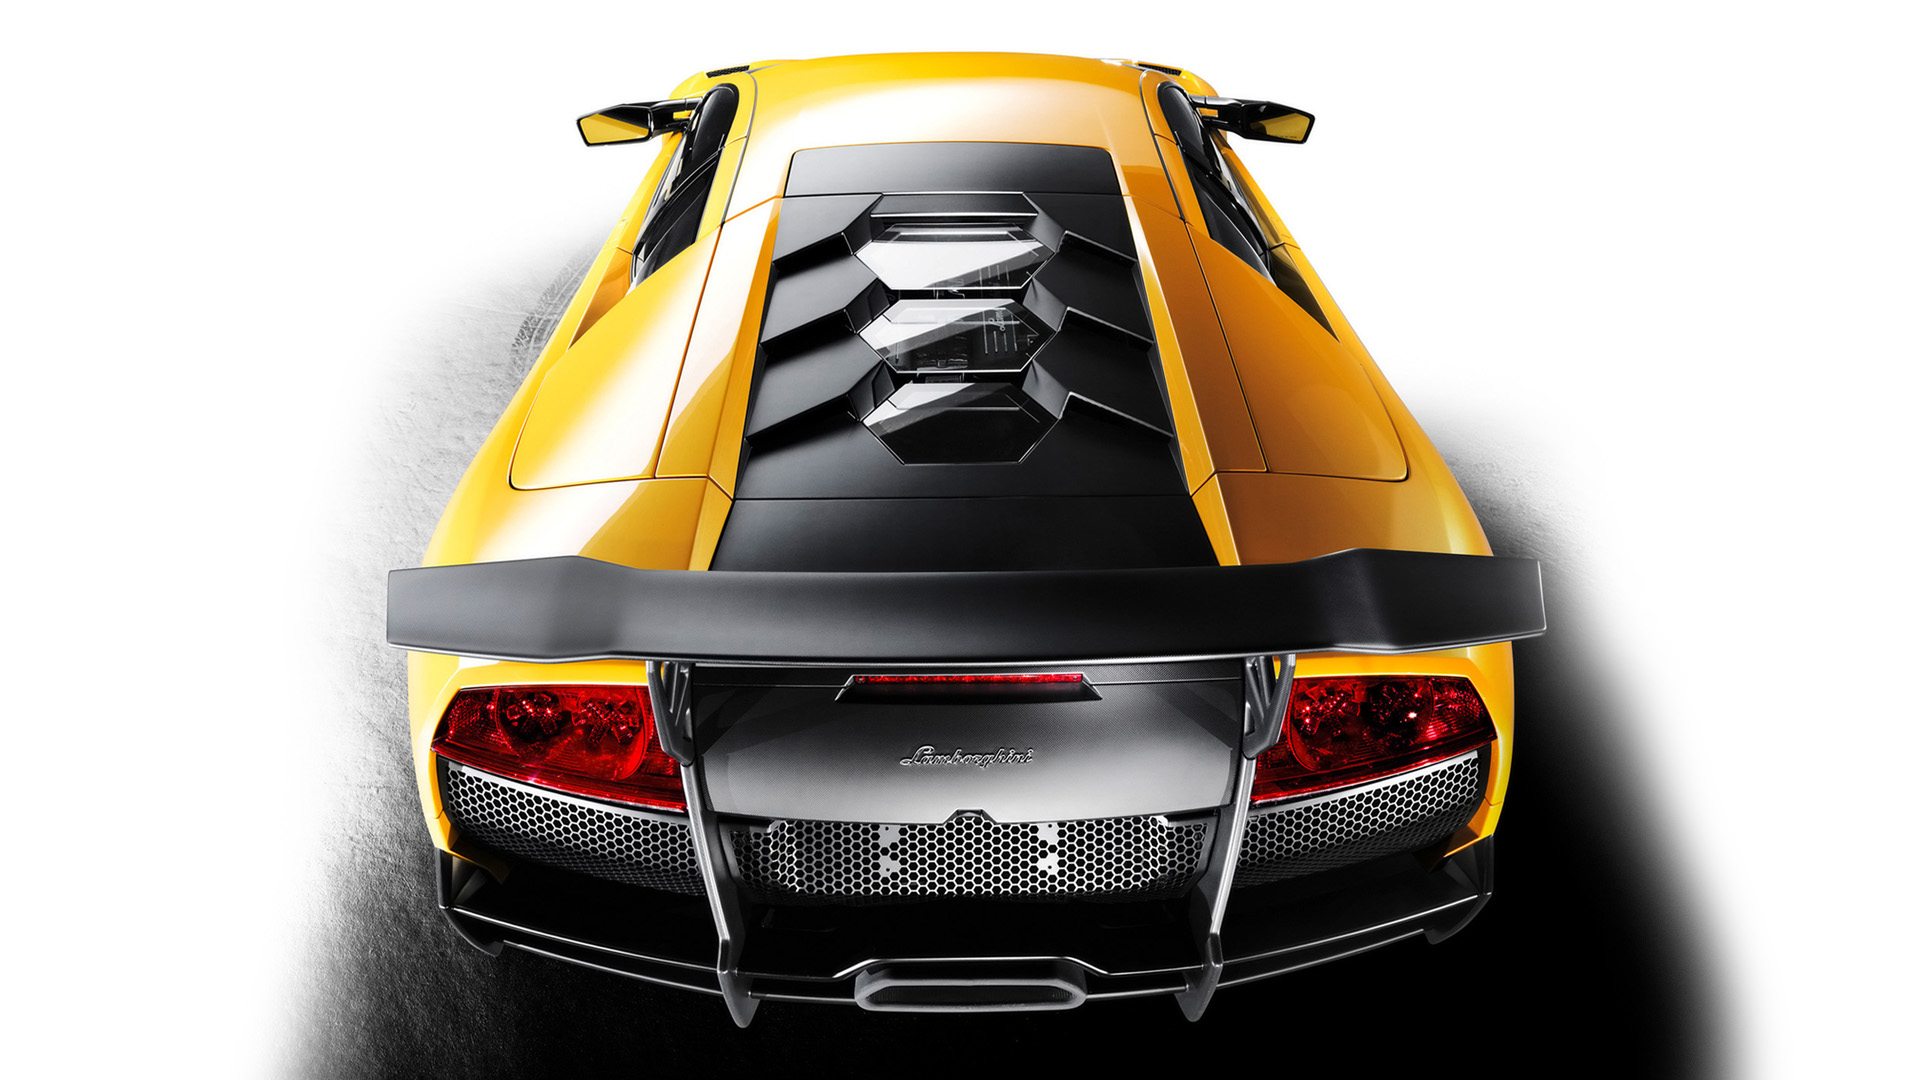  2009 Lamborghini Murcielago LP670-4 Super Veloce Wallpaper.